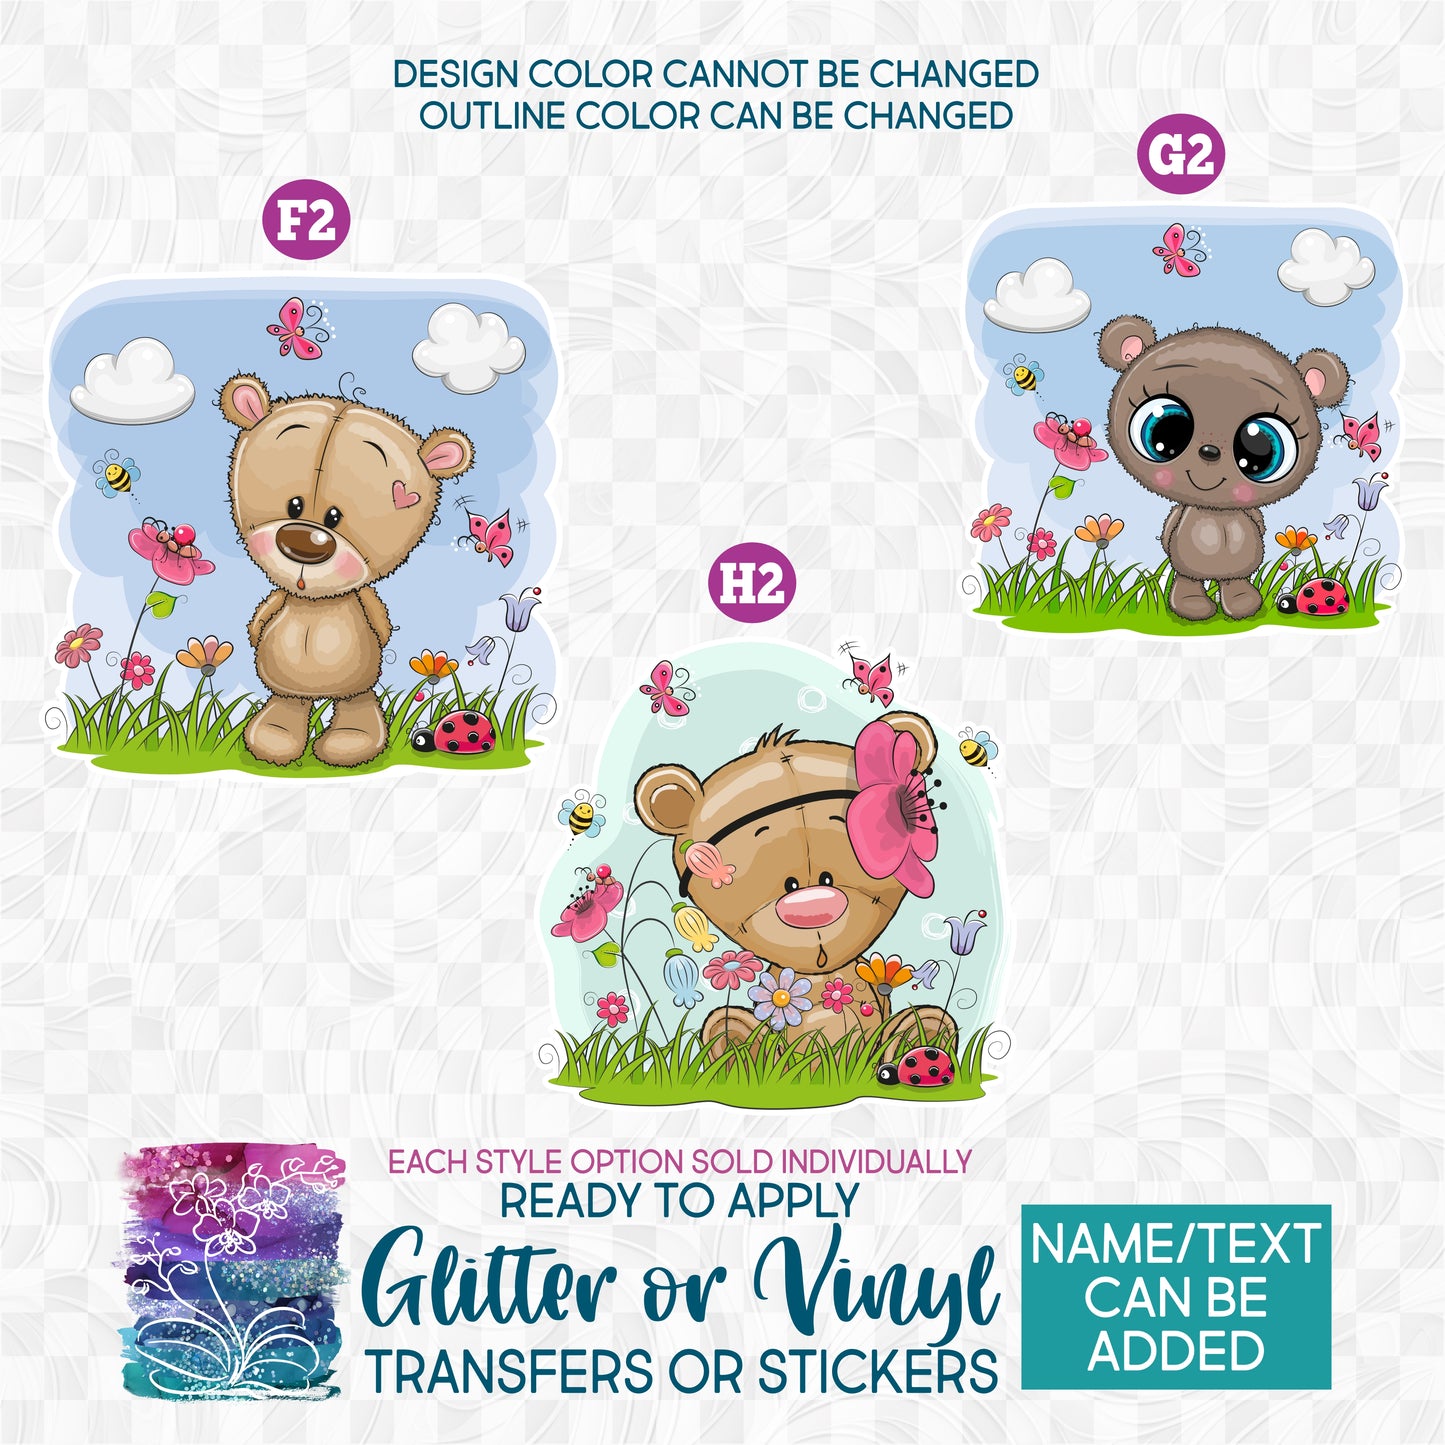 (s133-C) Cute Teddy Bear Summer Spring Meadow Glitter or Vinyl Iron-On Transfer or Sticker